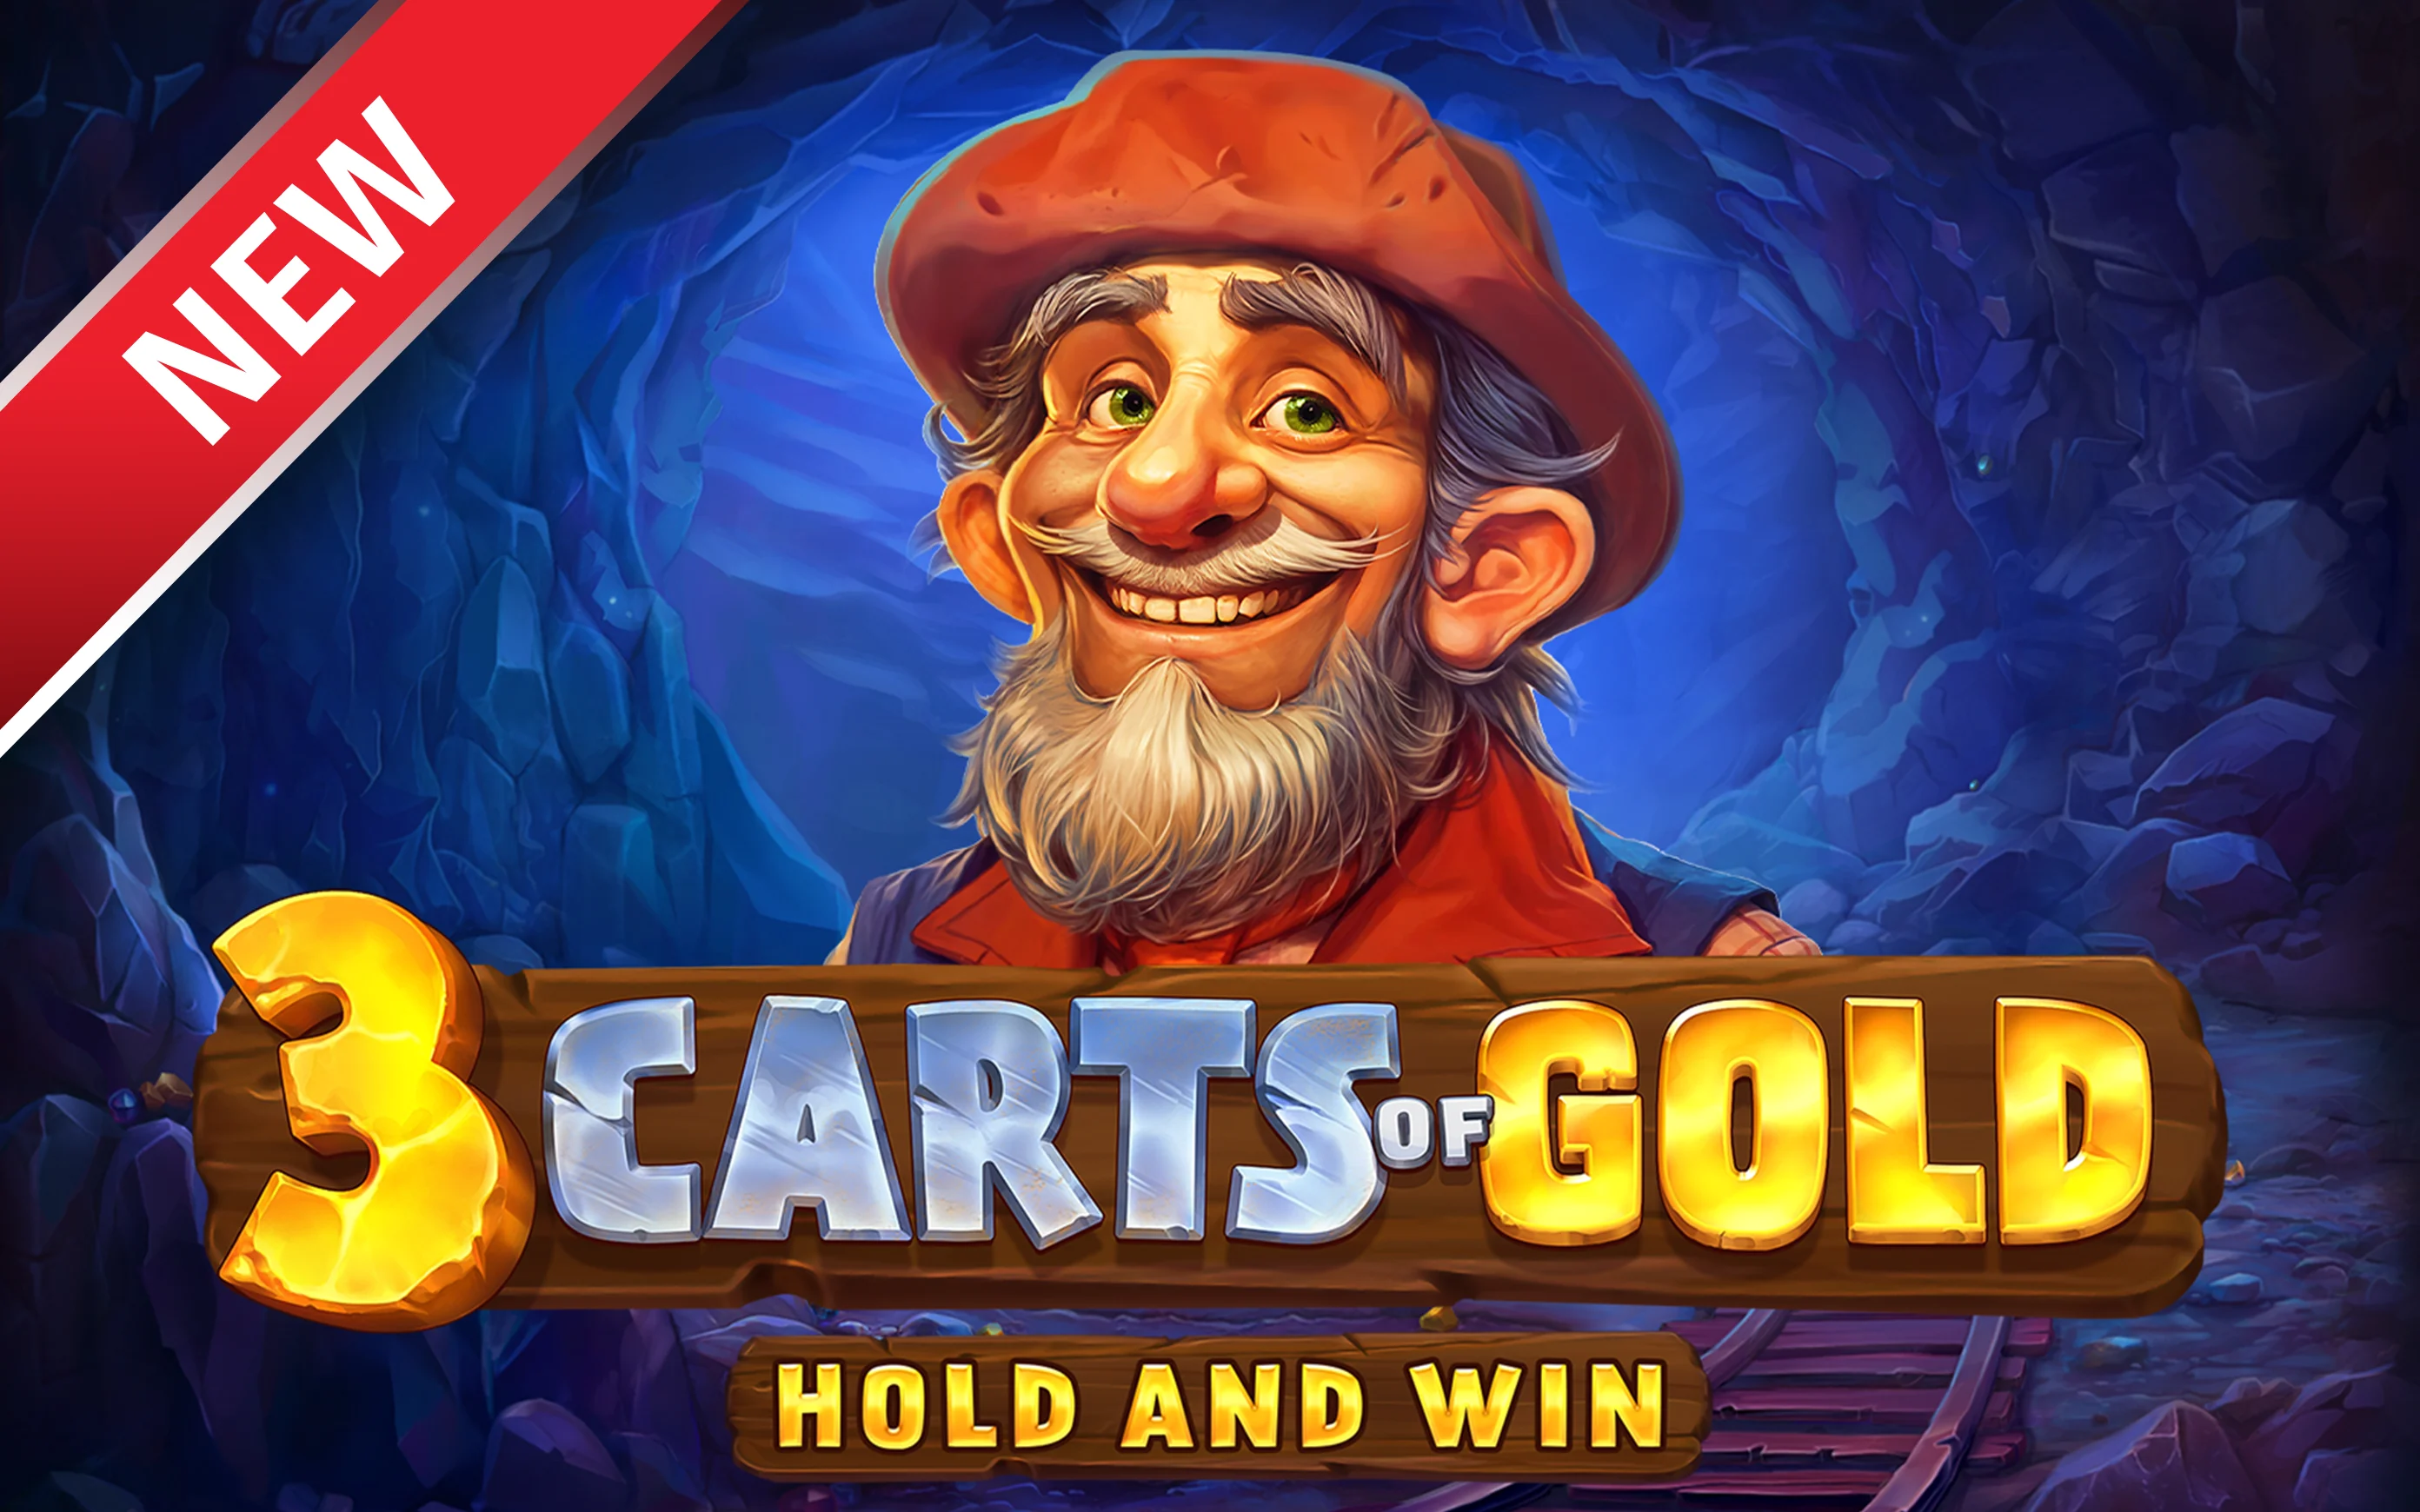 Jouer à 3 Carts of Gold: Hold and Win sur le casino en ligne Starcasino.be